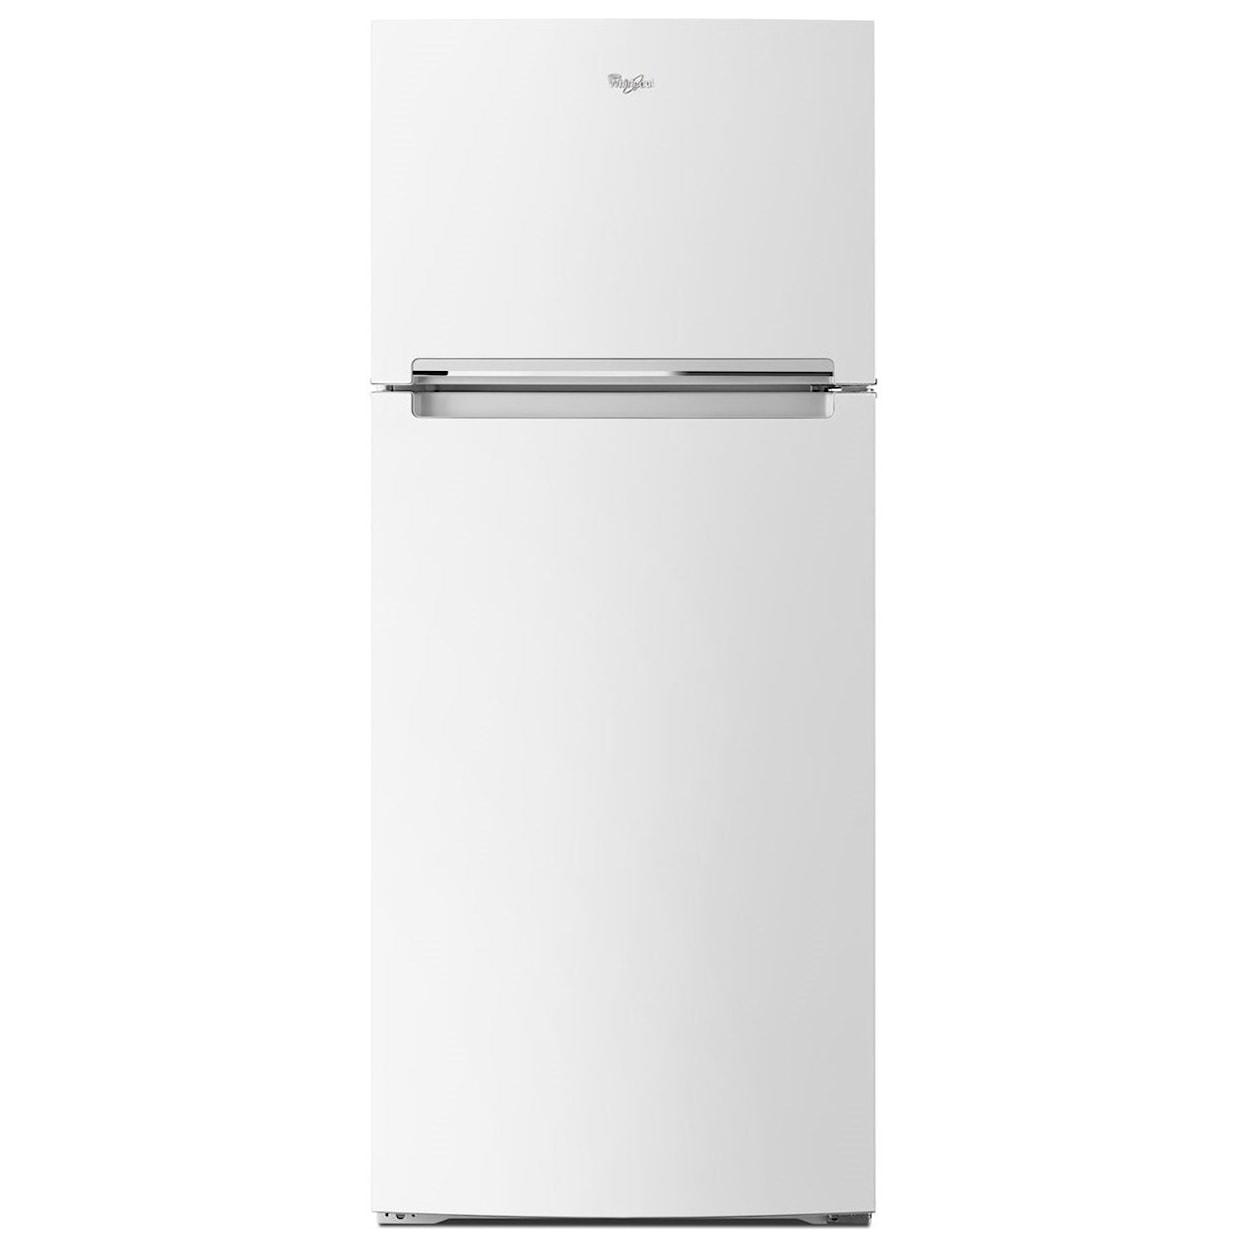 Whirlpool Top Mount Refrigerators 28-inch Wide Whirlpool® Refrigerator